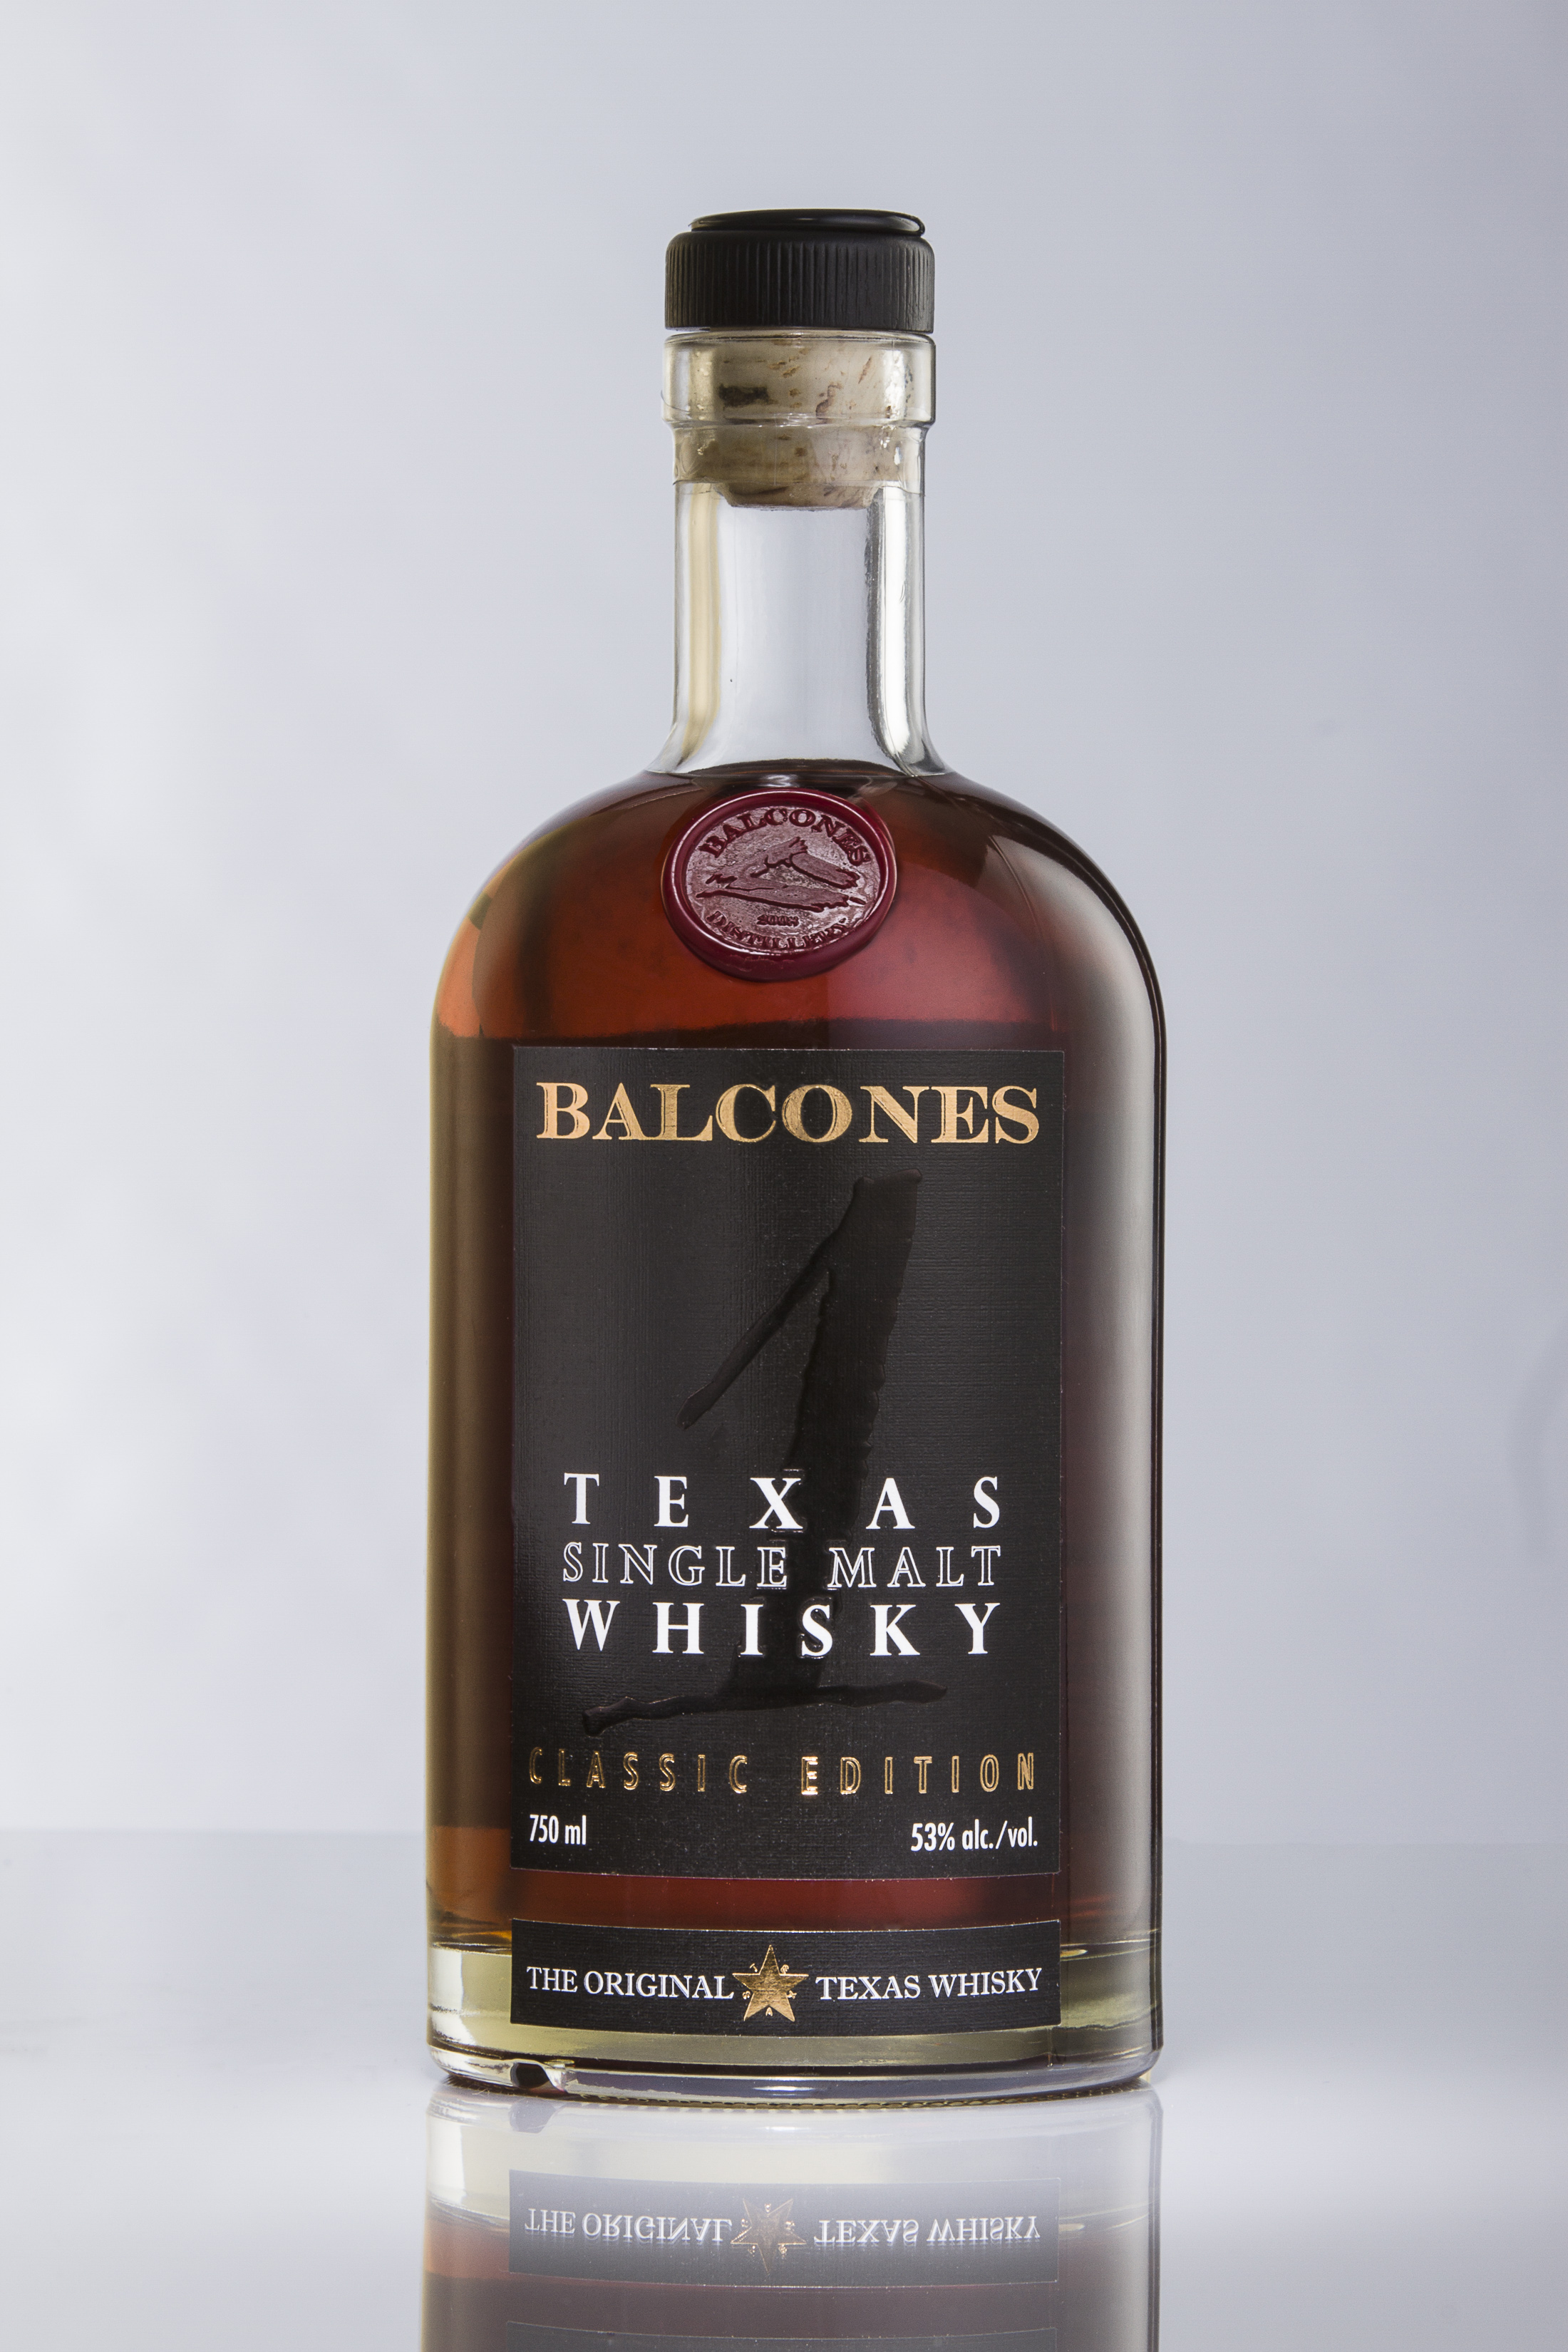 Balcones Texas Single Malt – single malt scotch